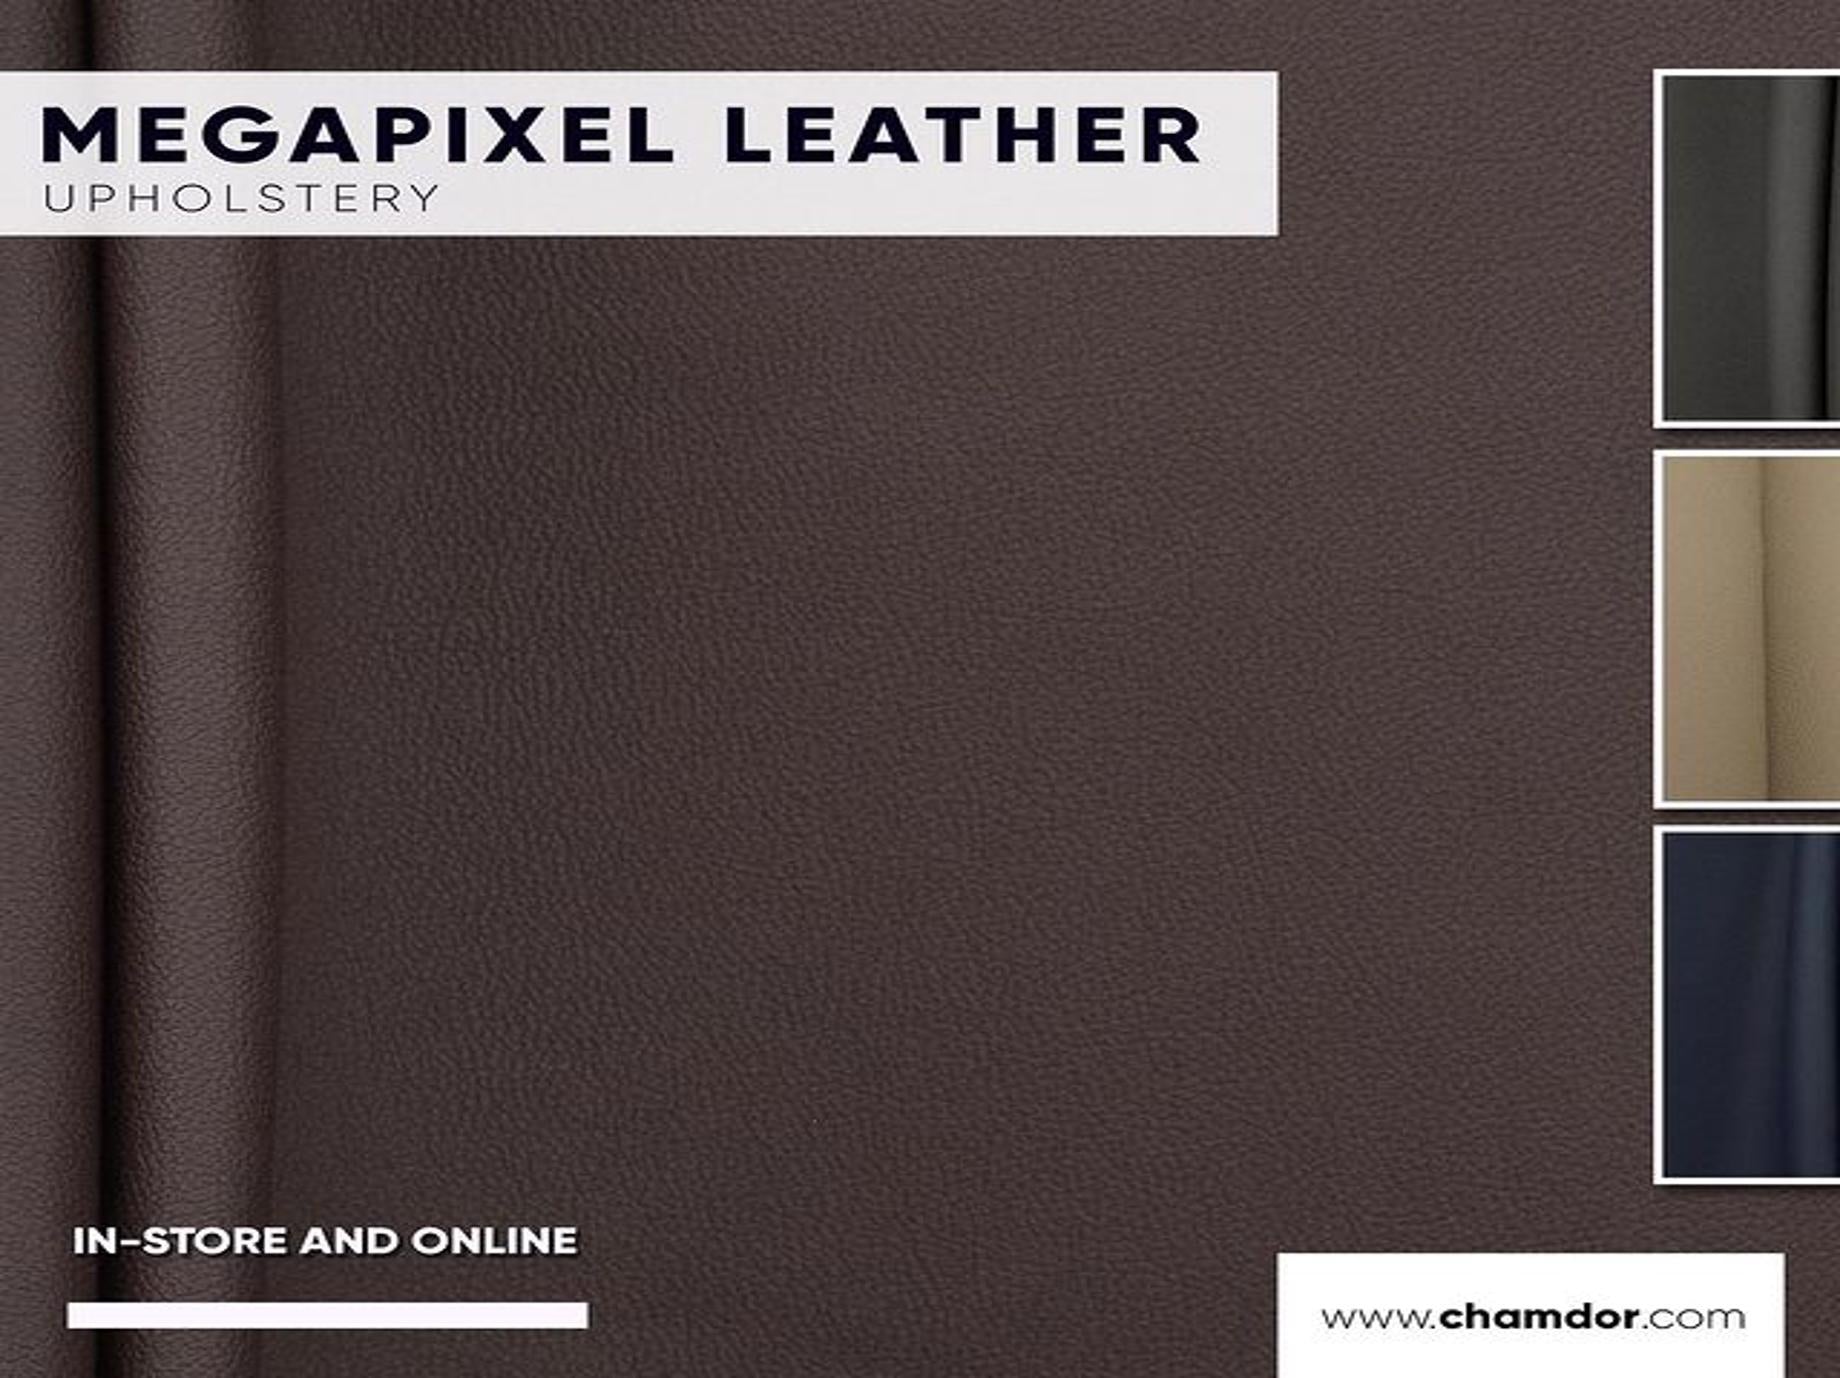 Megapixel Leather